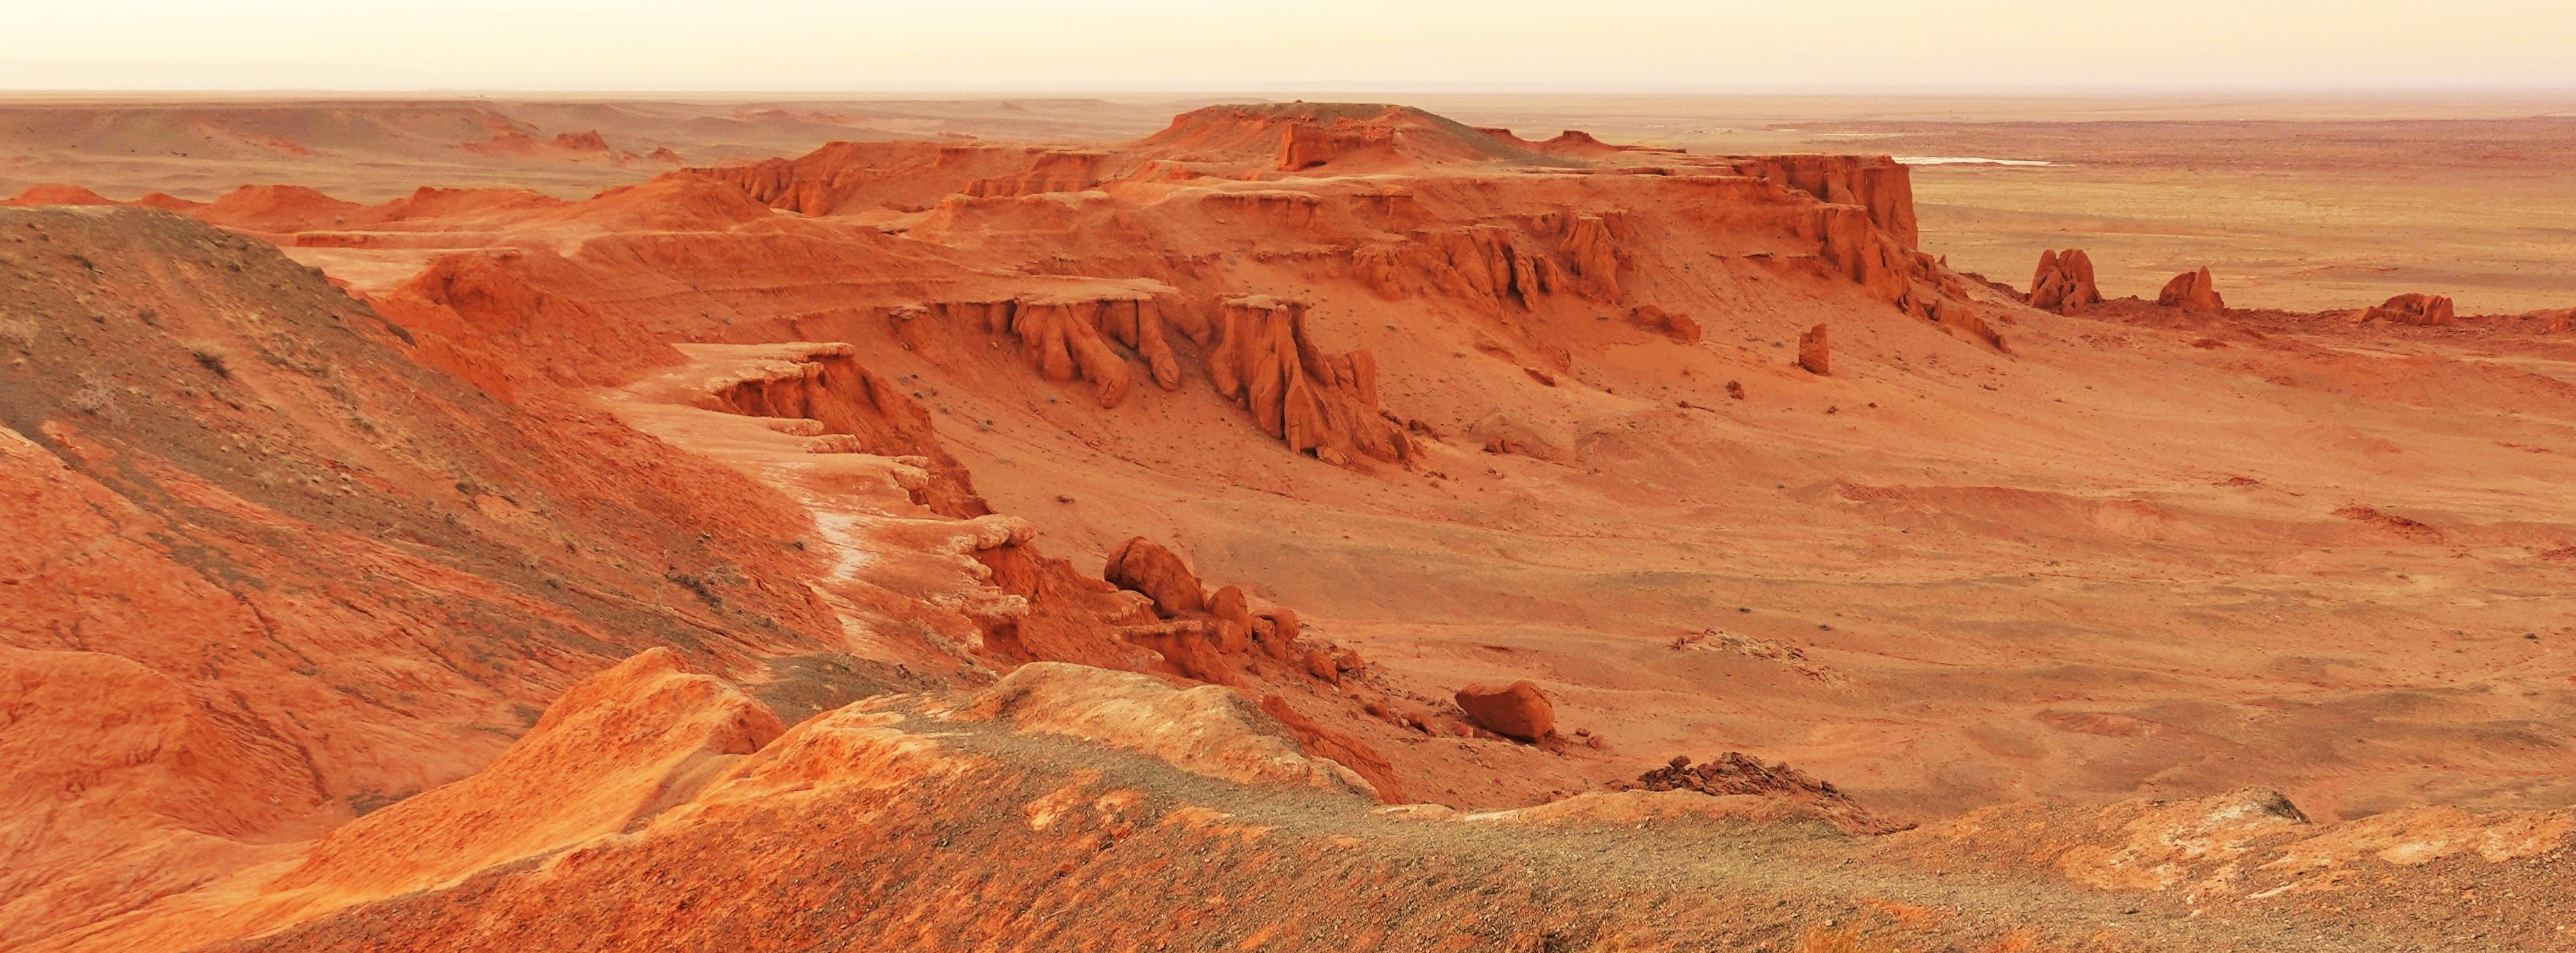 Gobi Desert, Flaming cliffs panorama, Baynzag treasures, Stone horse, 3720x1380 Dual Screen Desktop